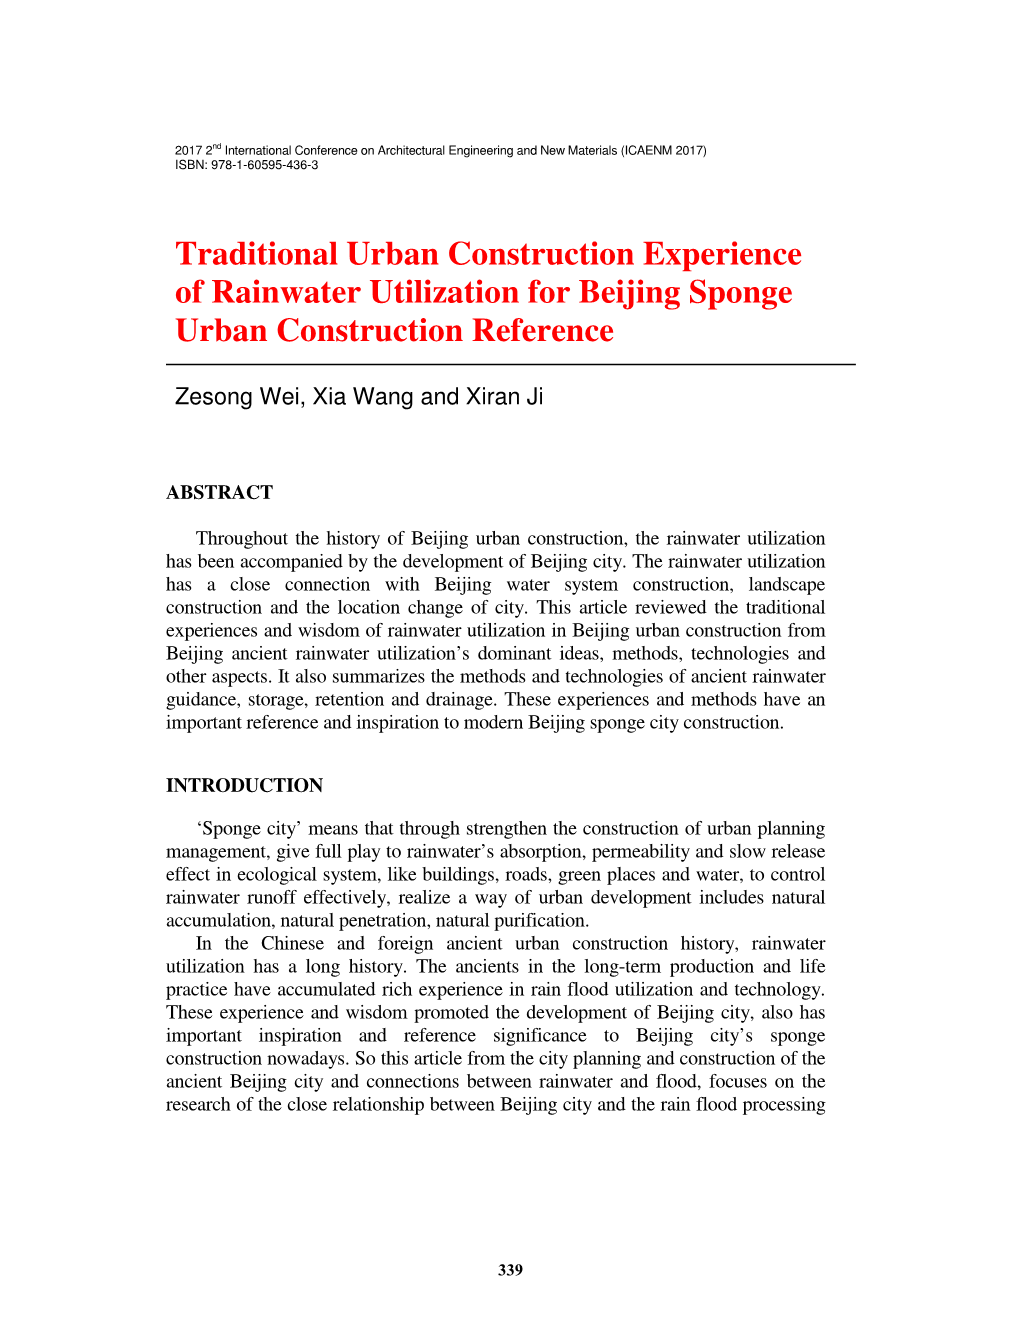 Traditional Urban Construction Experience of Rainwater Utilization for Beijing Sponge